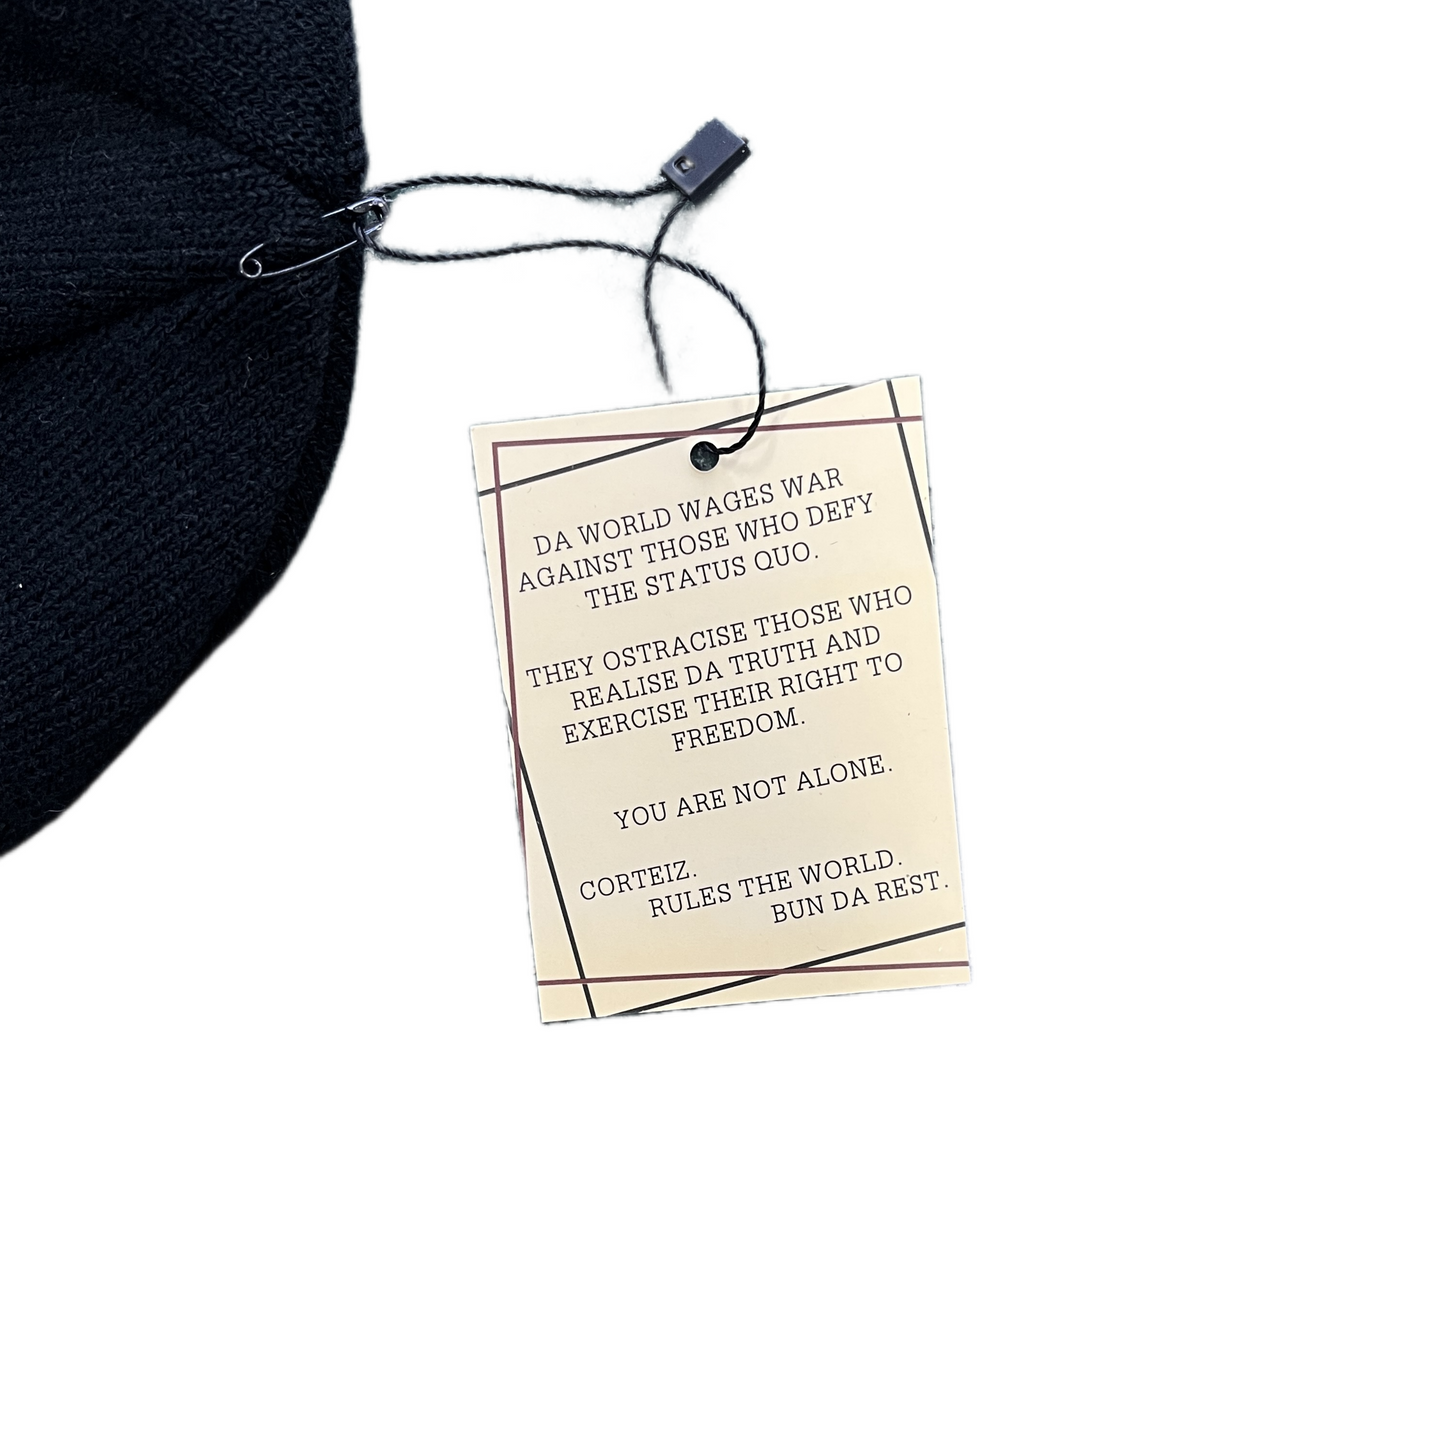 Corteiz Alcatraz Beanie Knitting Warm Cap Demon Printed Cold Hat - Black/Yellow